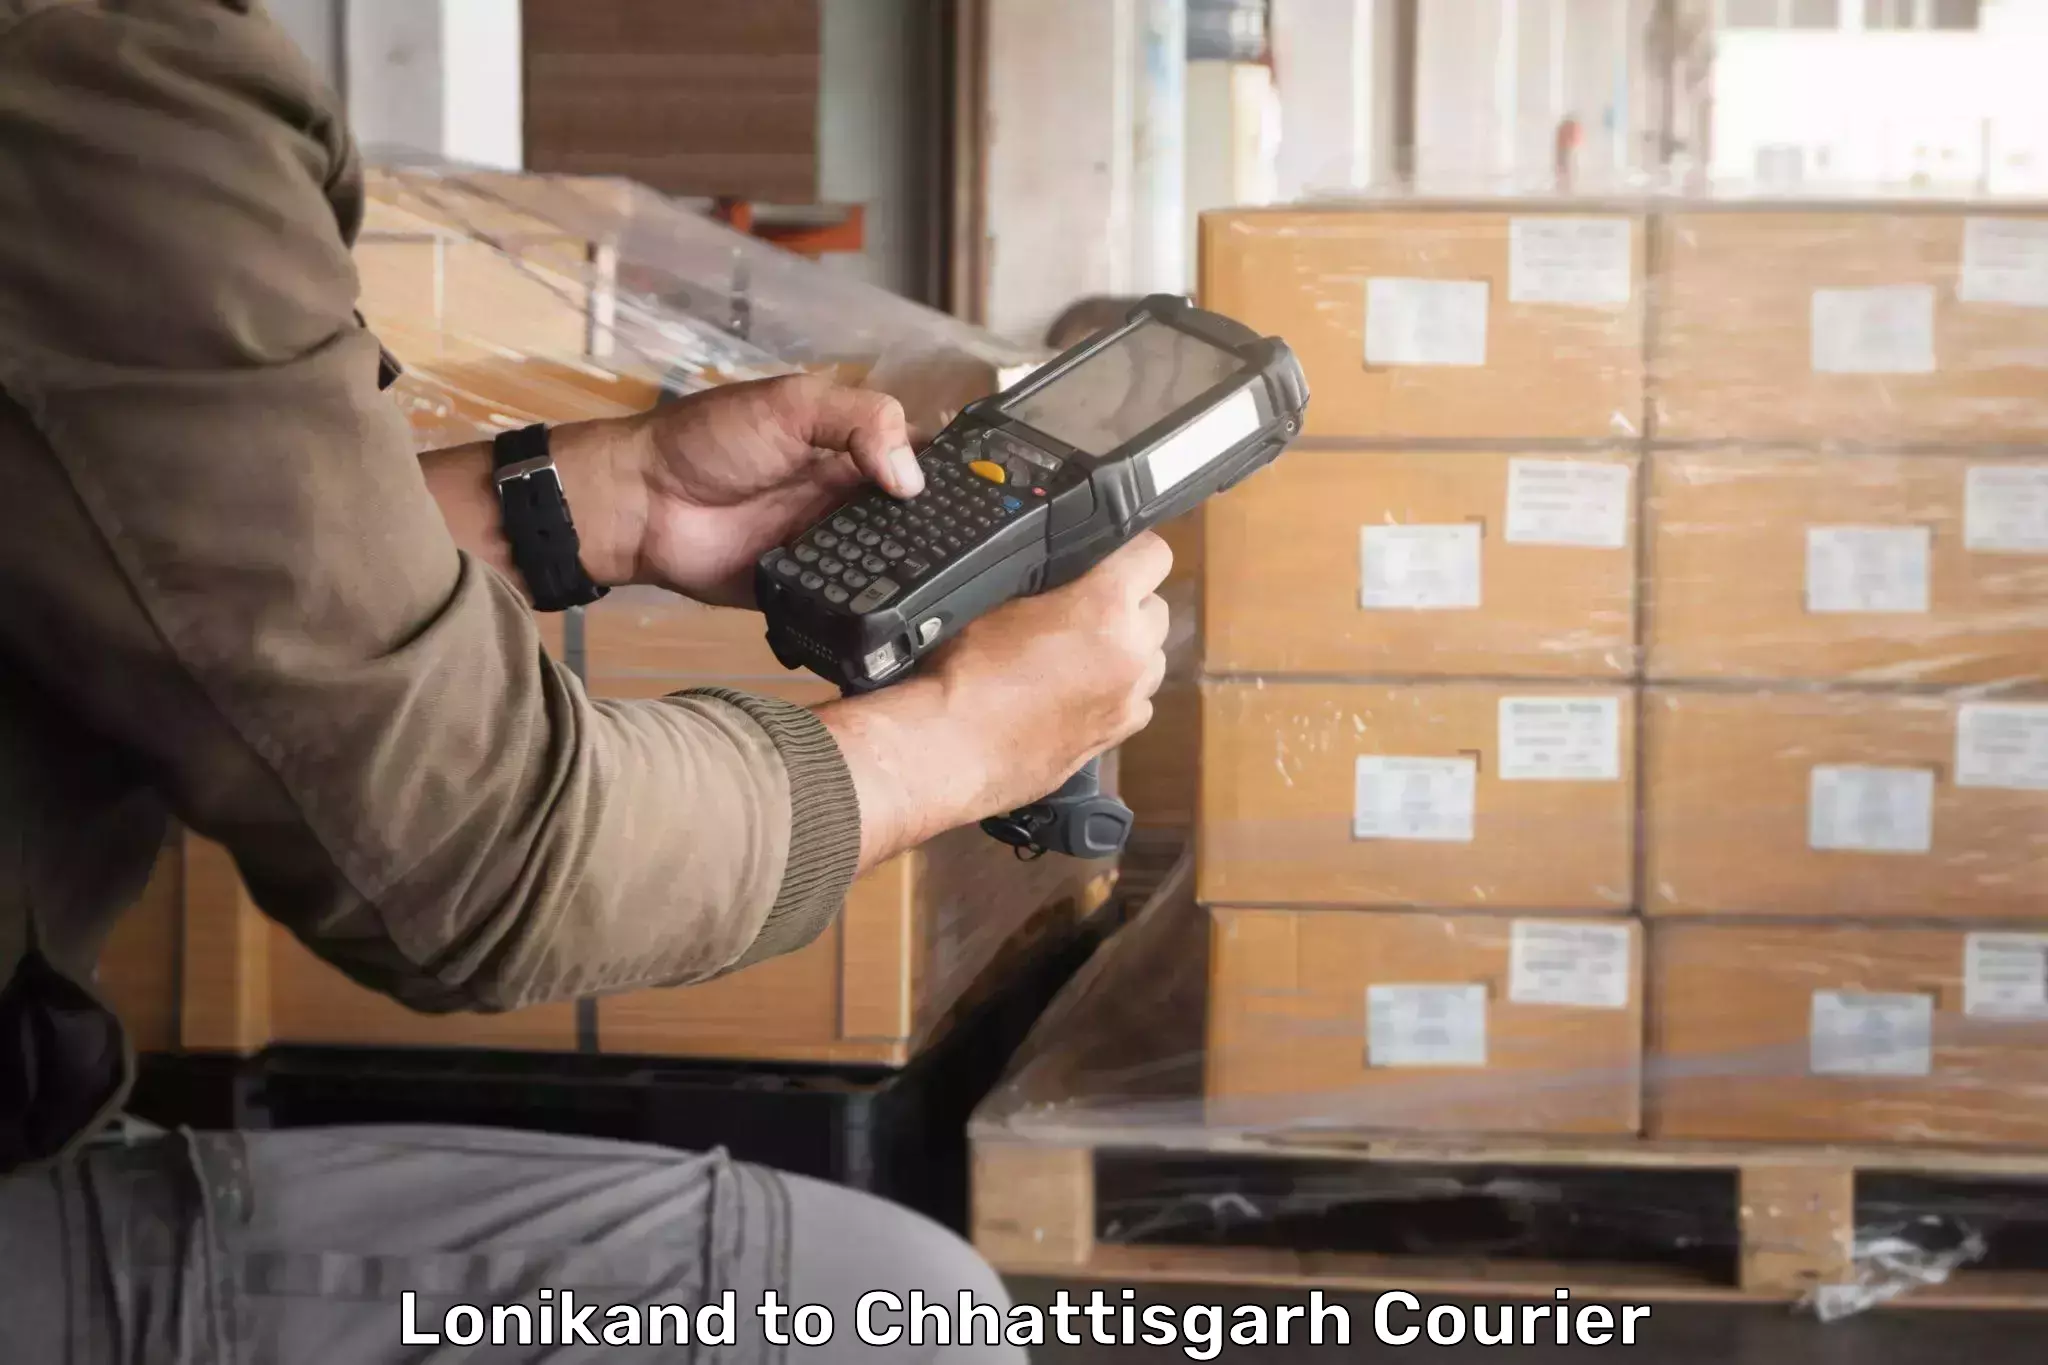 International courier networks Lonikand to Patna Chhattisgarh